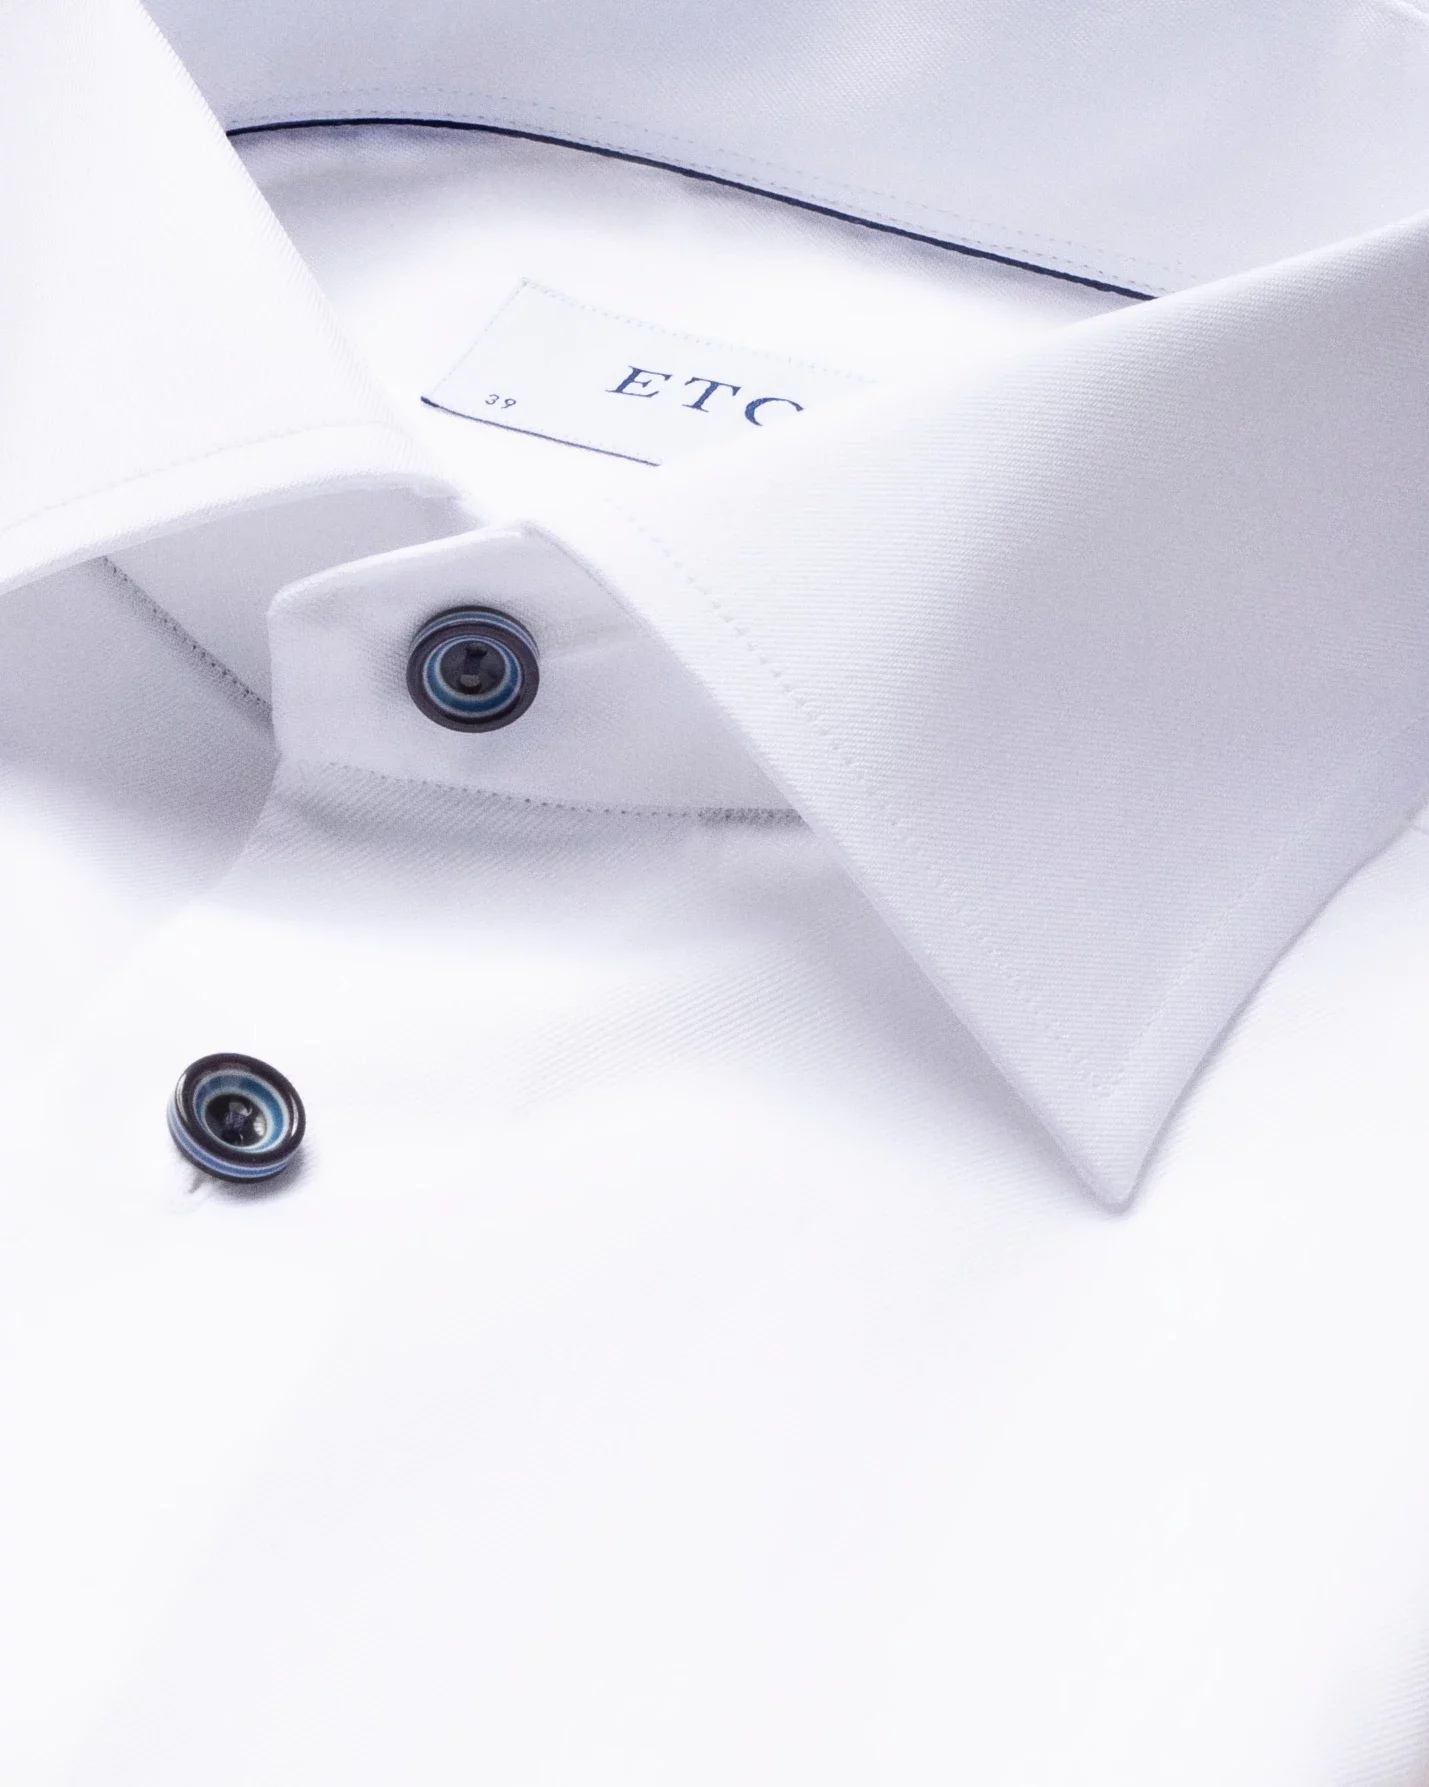 Eton - white twill shirt navy buttons